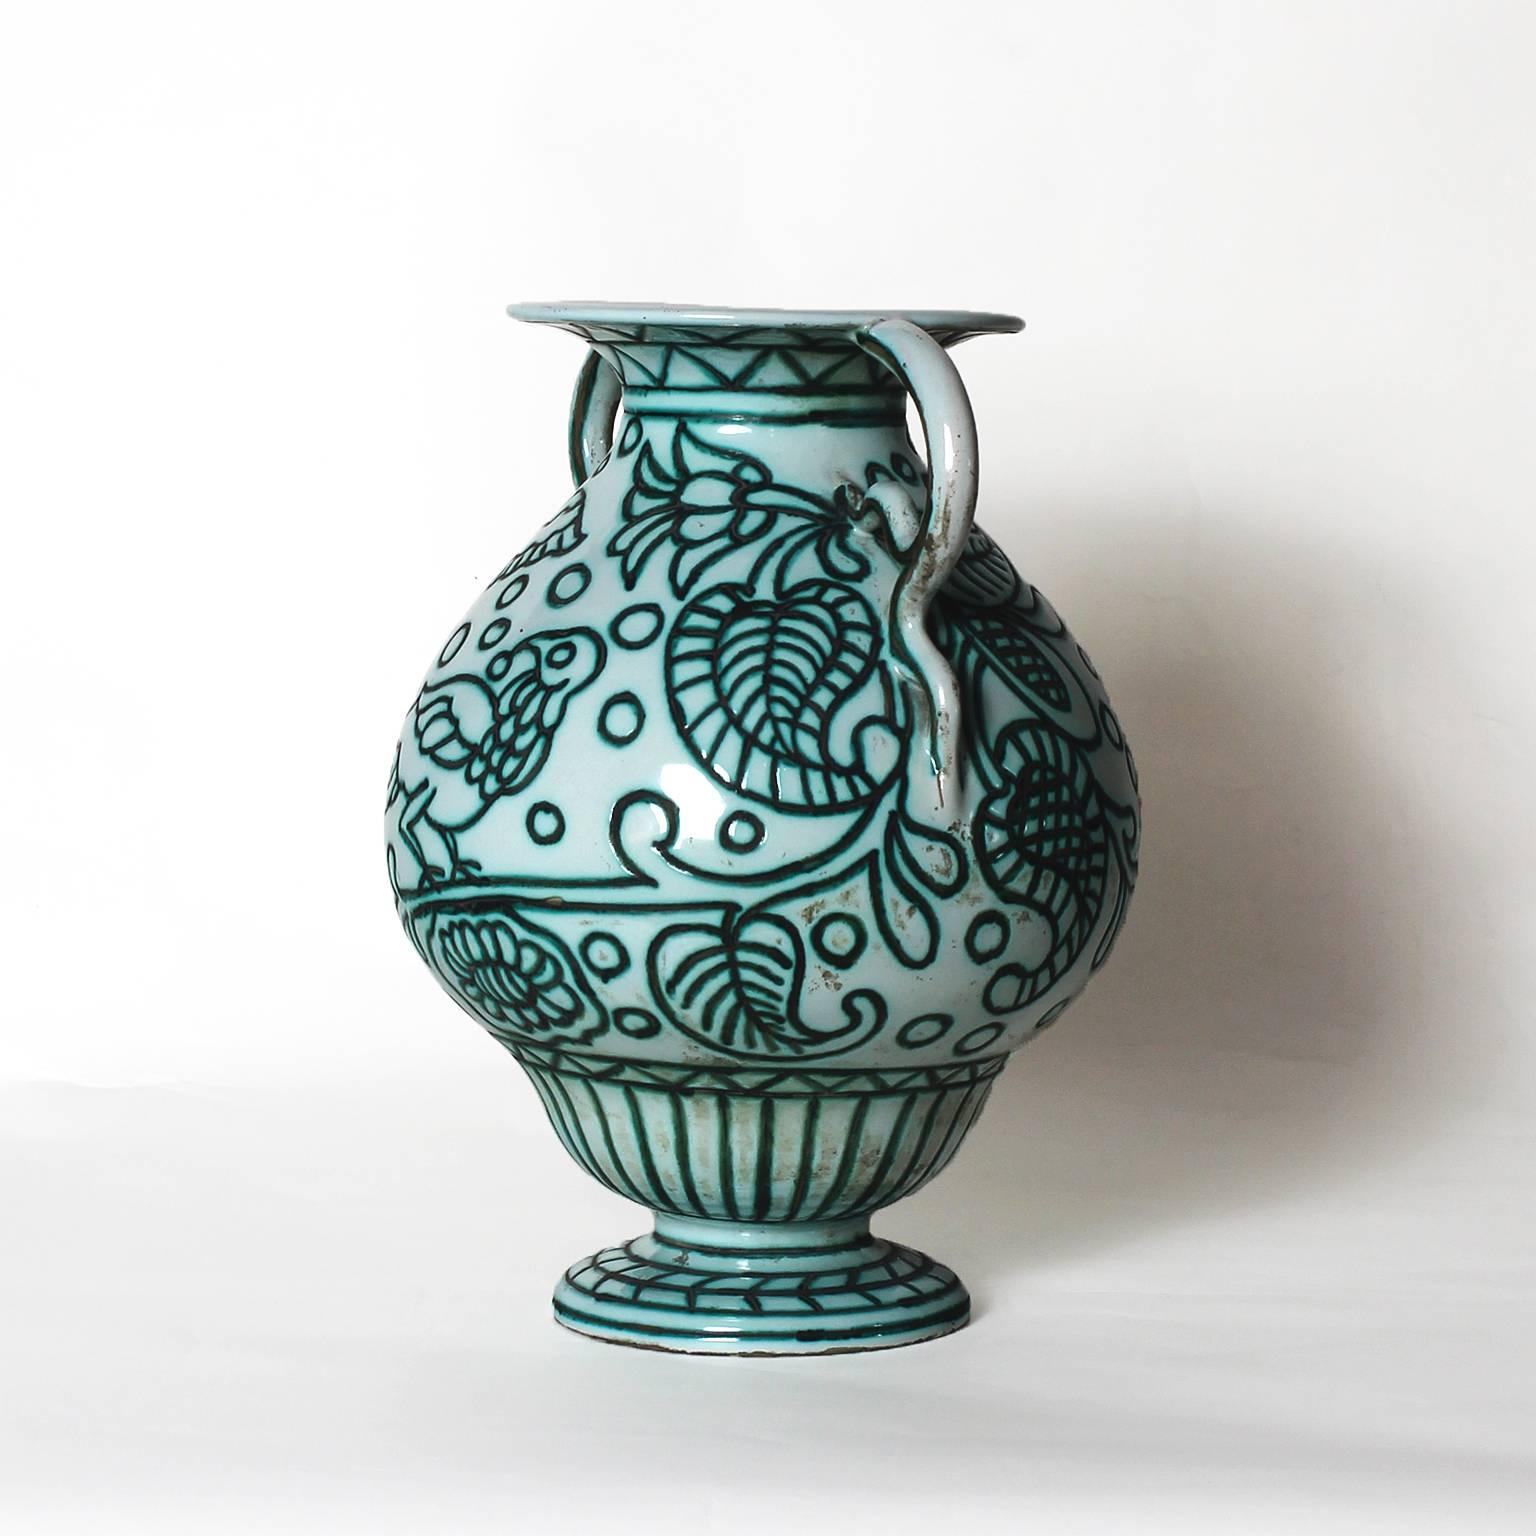 Ceramic vase with two handles, white and celadon green enamel, vegetal and bird decoration.

Maker: Casa Dell'arte. 

Italy, Albisola Capo, circa 1922-1925.